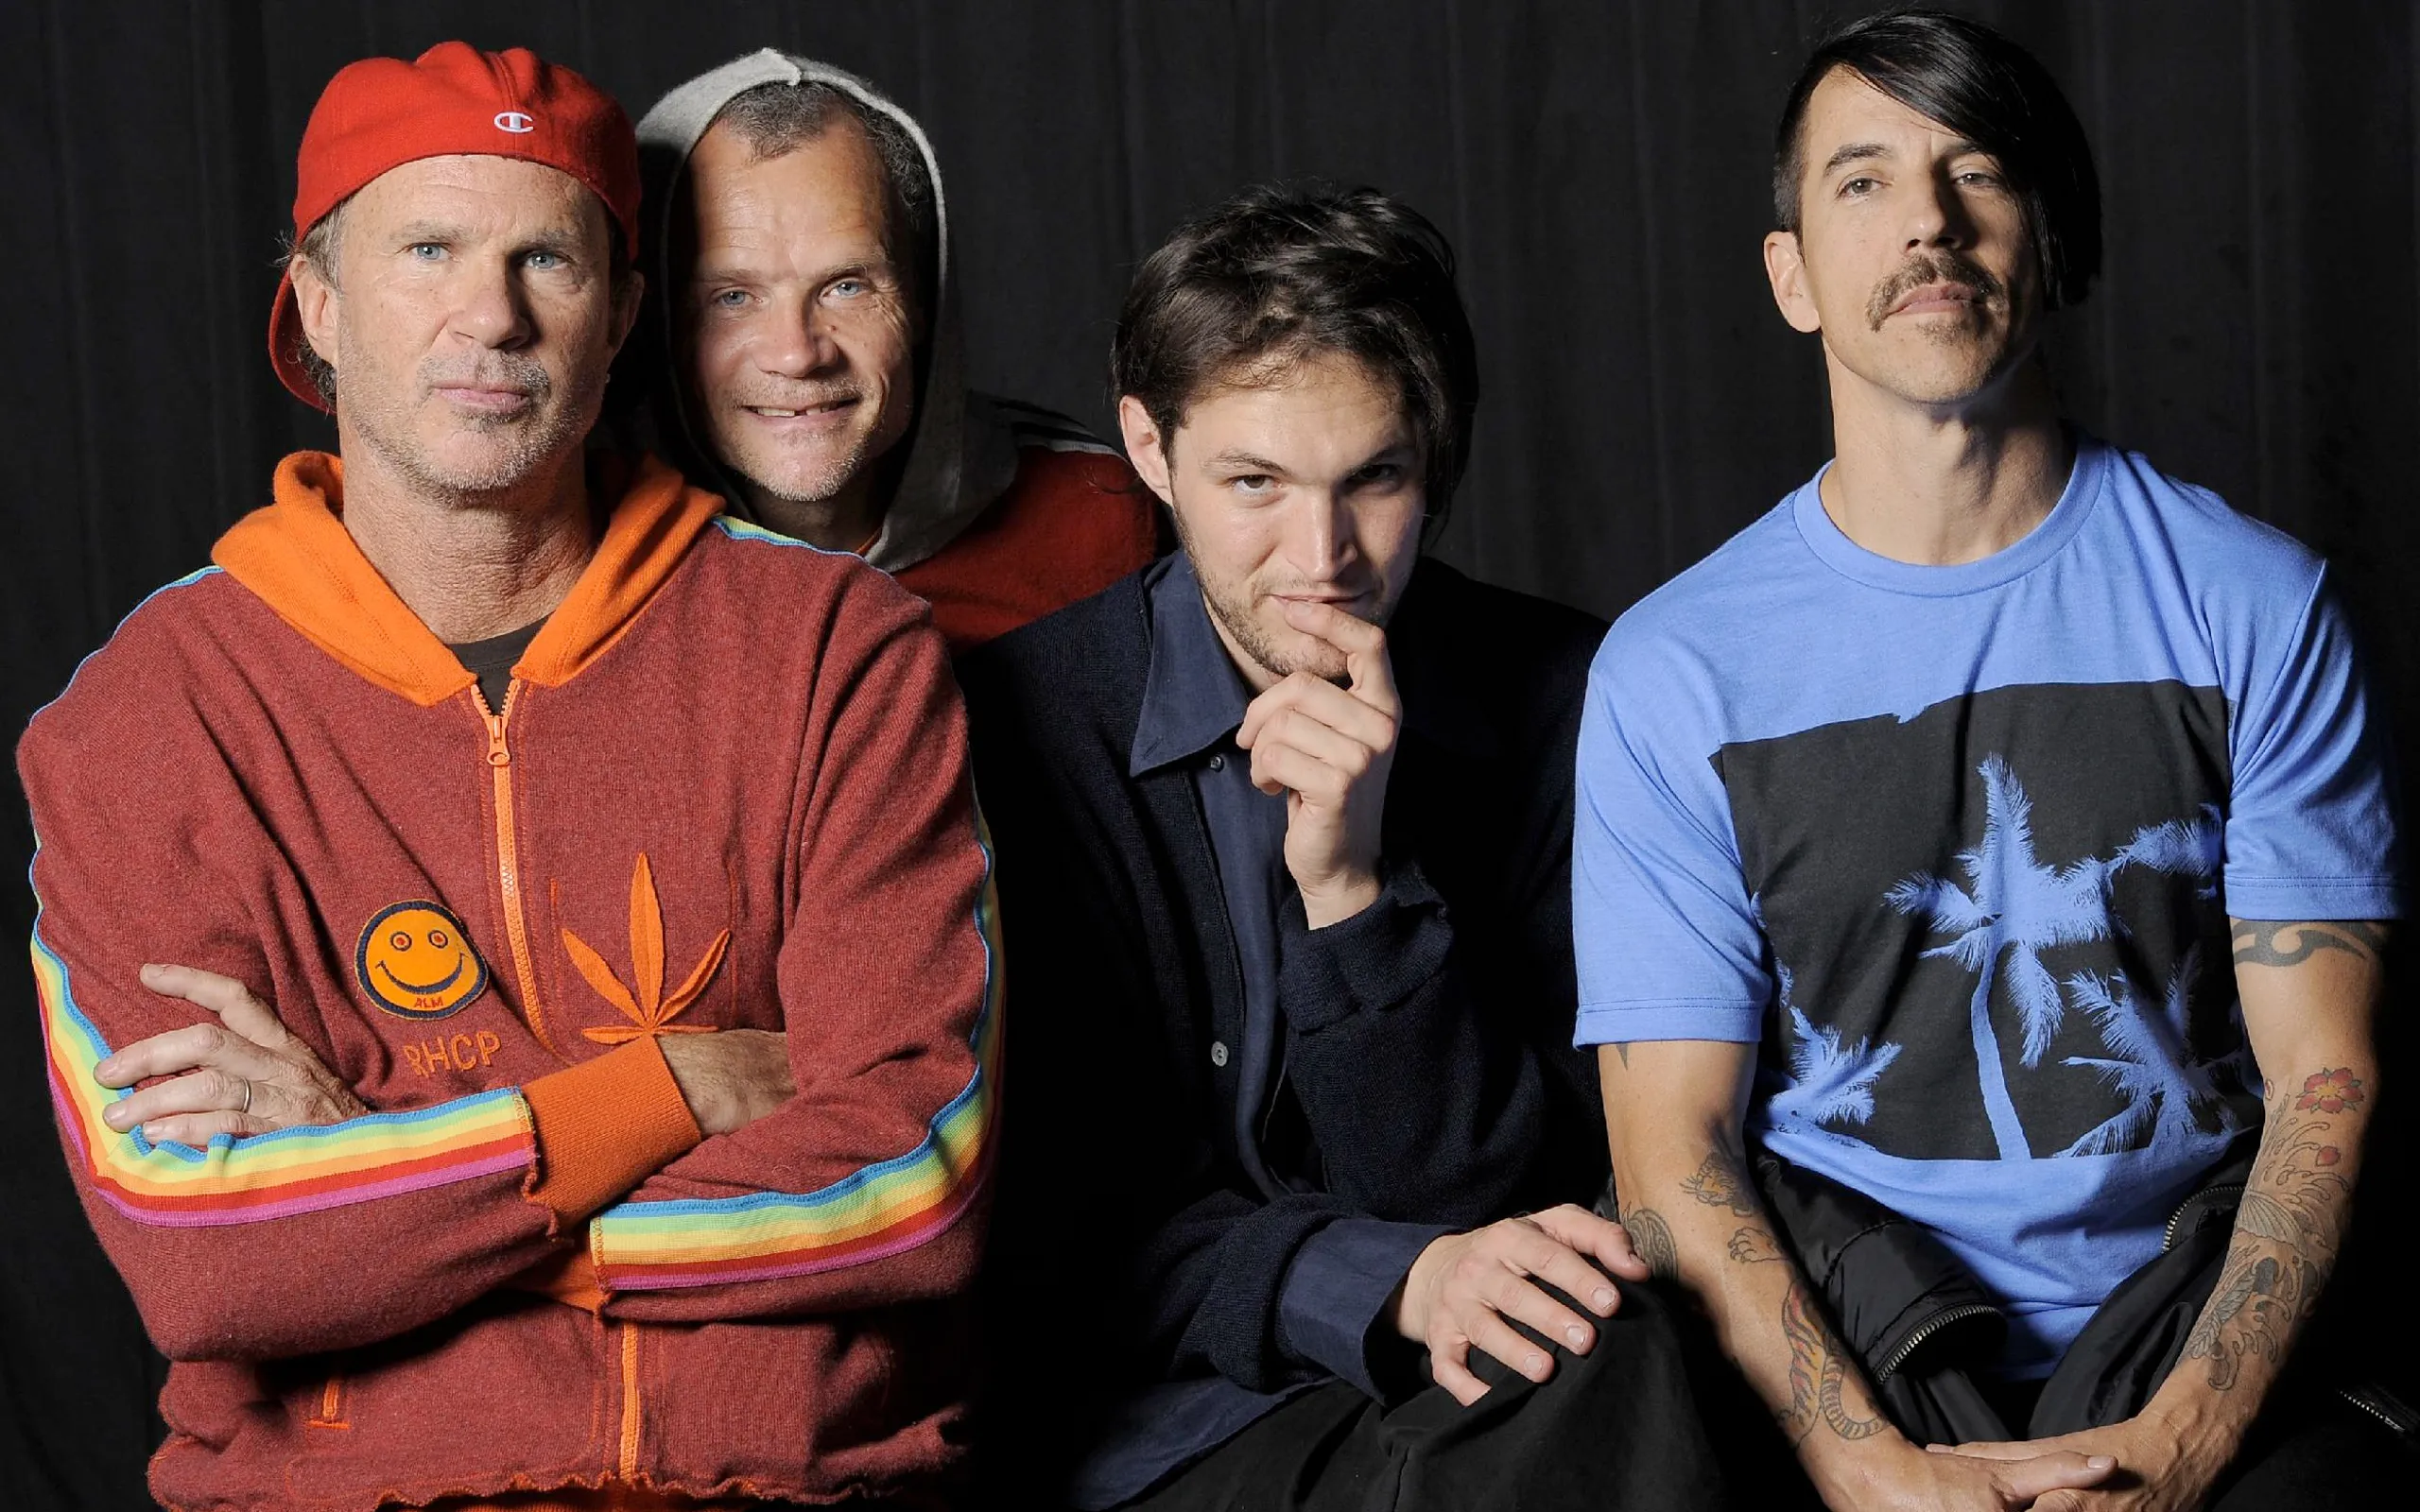 Red hot peppers клипы. Группа ред хот Чили пеперс. Группа Red hot Chili Peppers 2022. Ред хот Чили пеперс 2000. Барабанщик ред хот Чили пеперс.